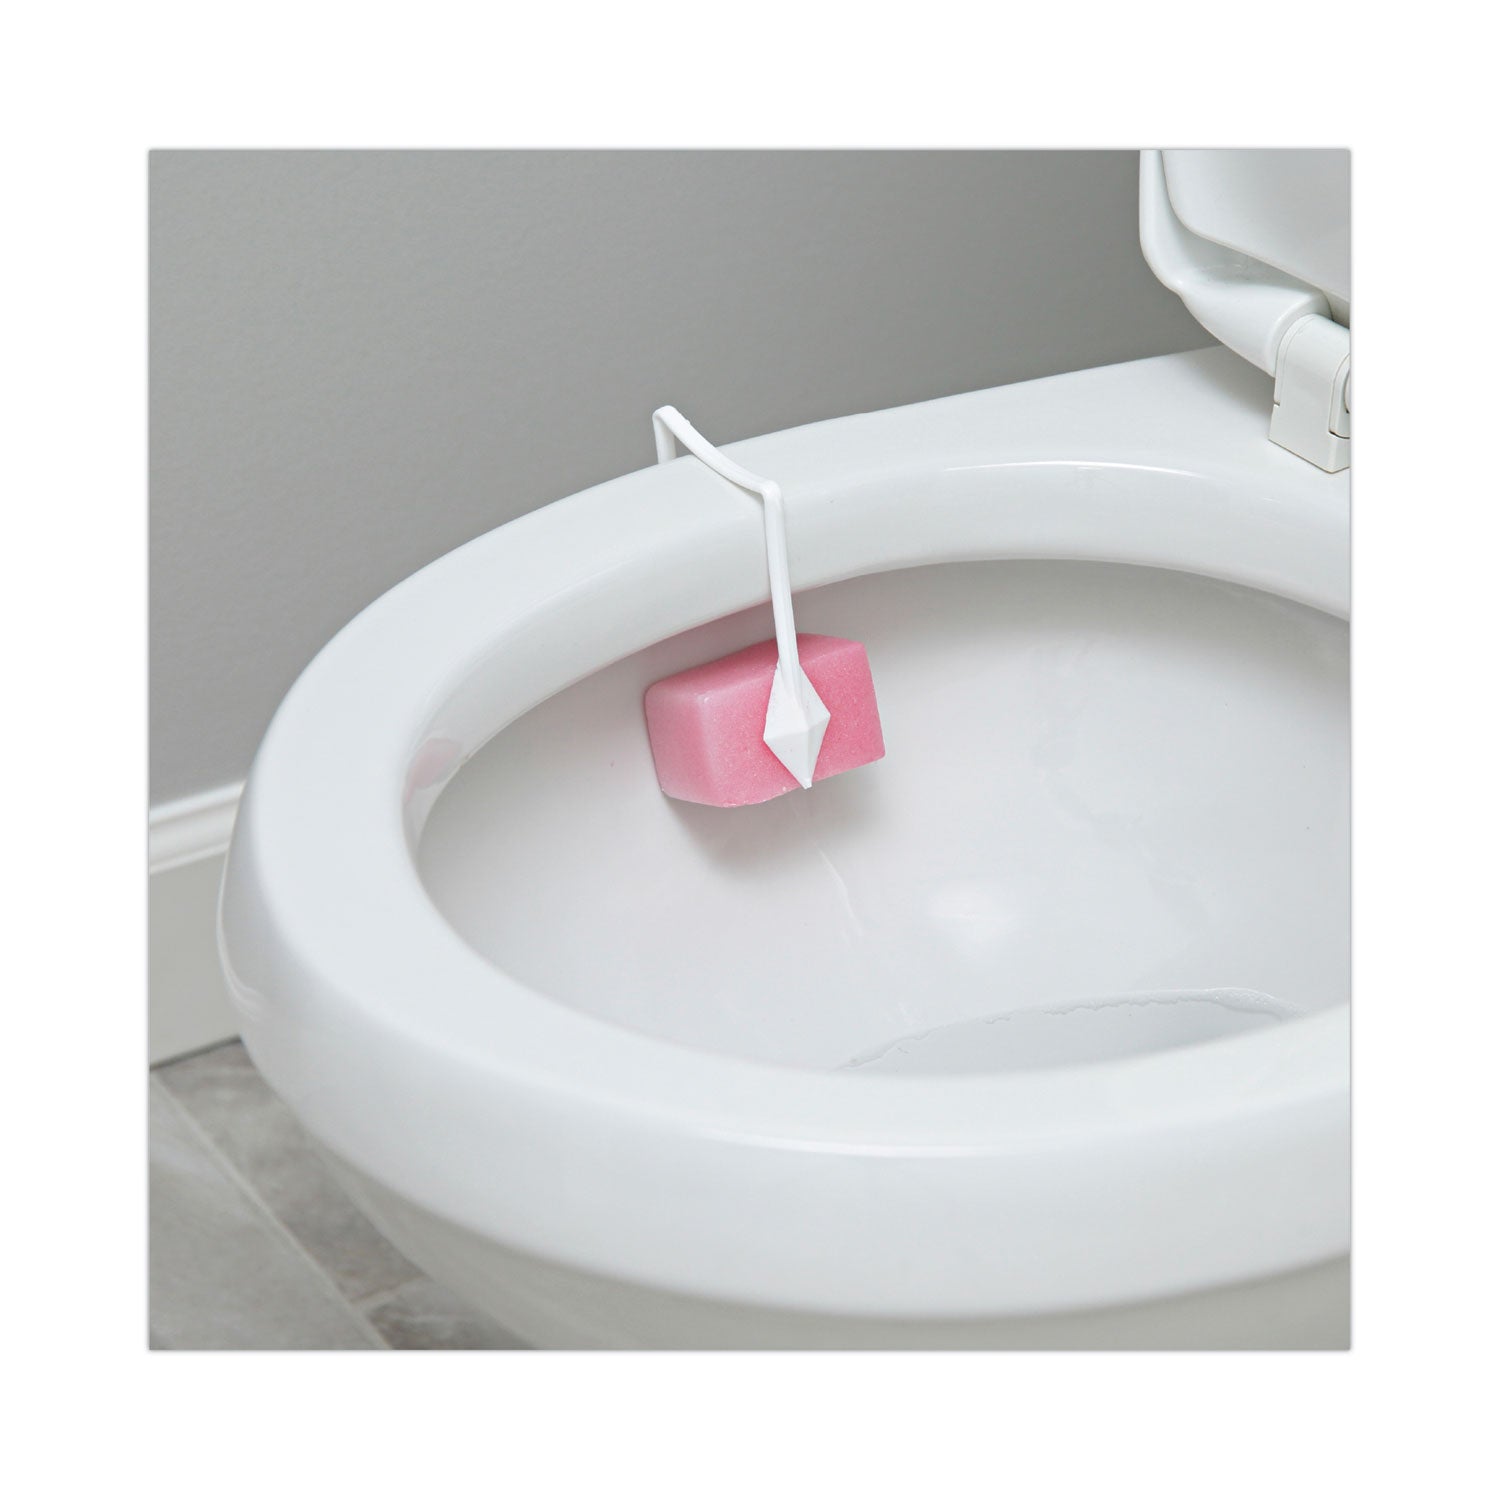 Toilet Bowl Para Deodorizer Block, Cherry Scent, 4 oz, Pink, 144/Carton - 